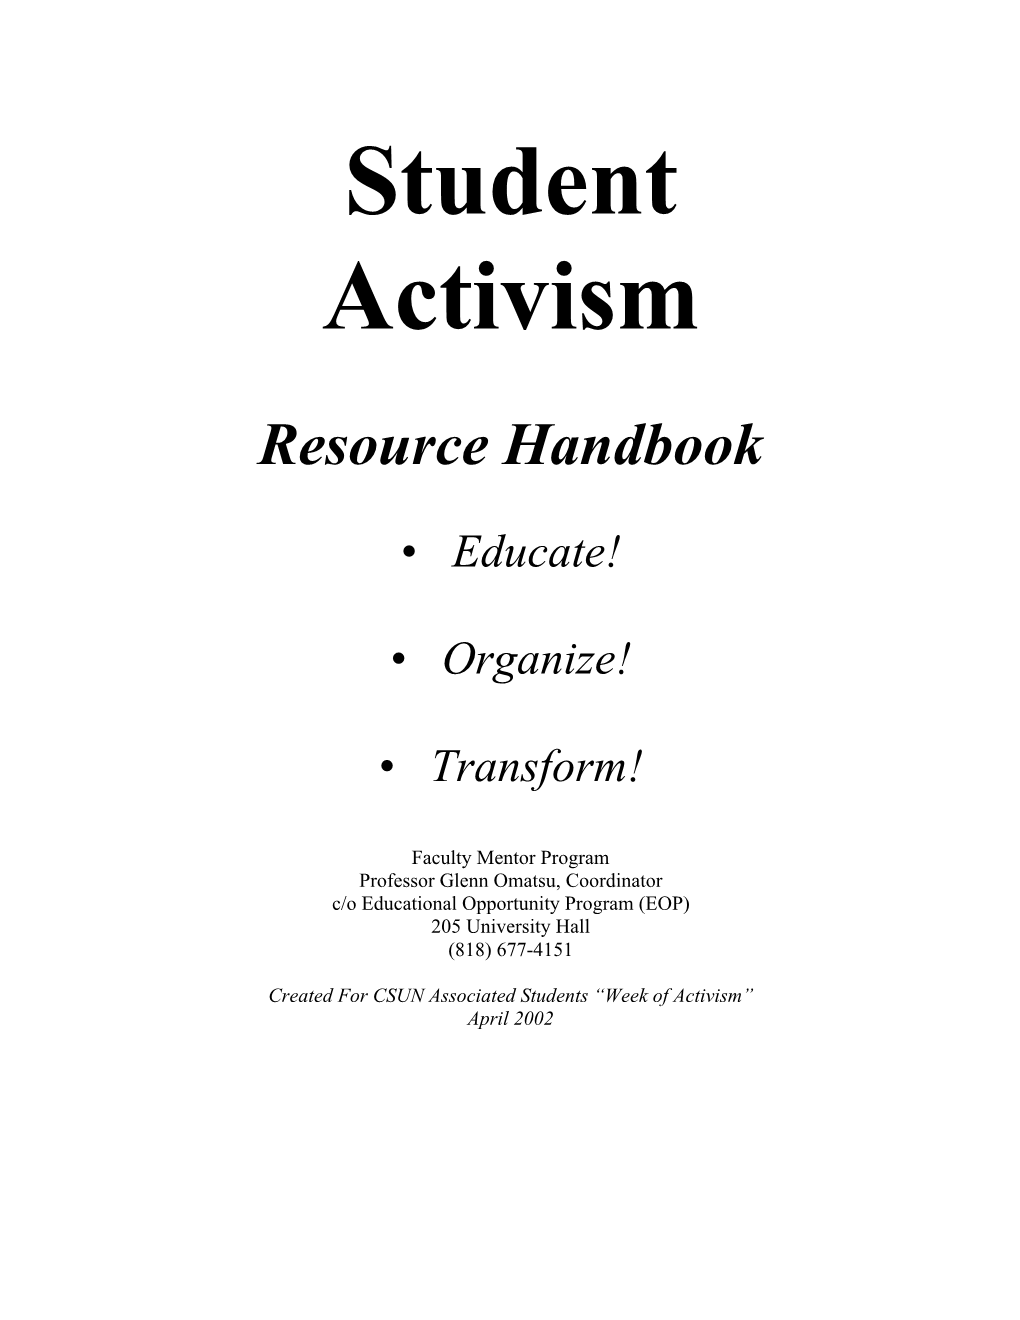 Student Activism